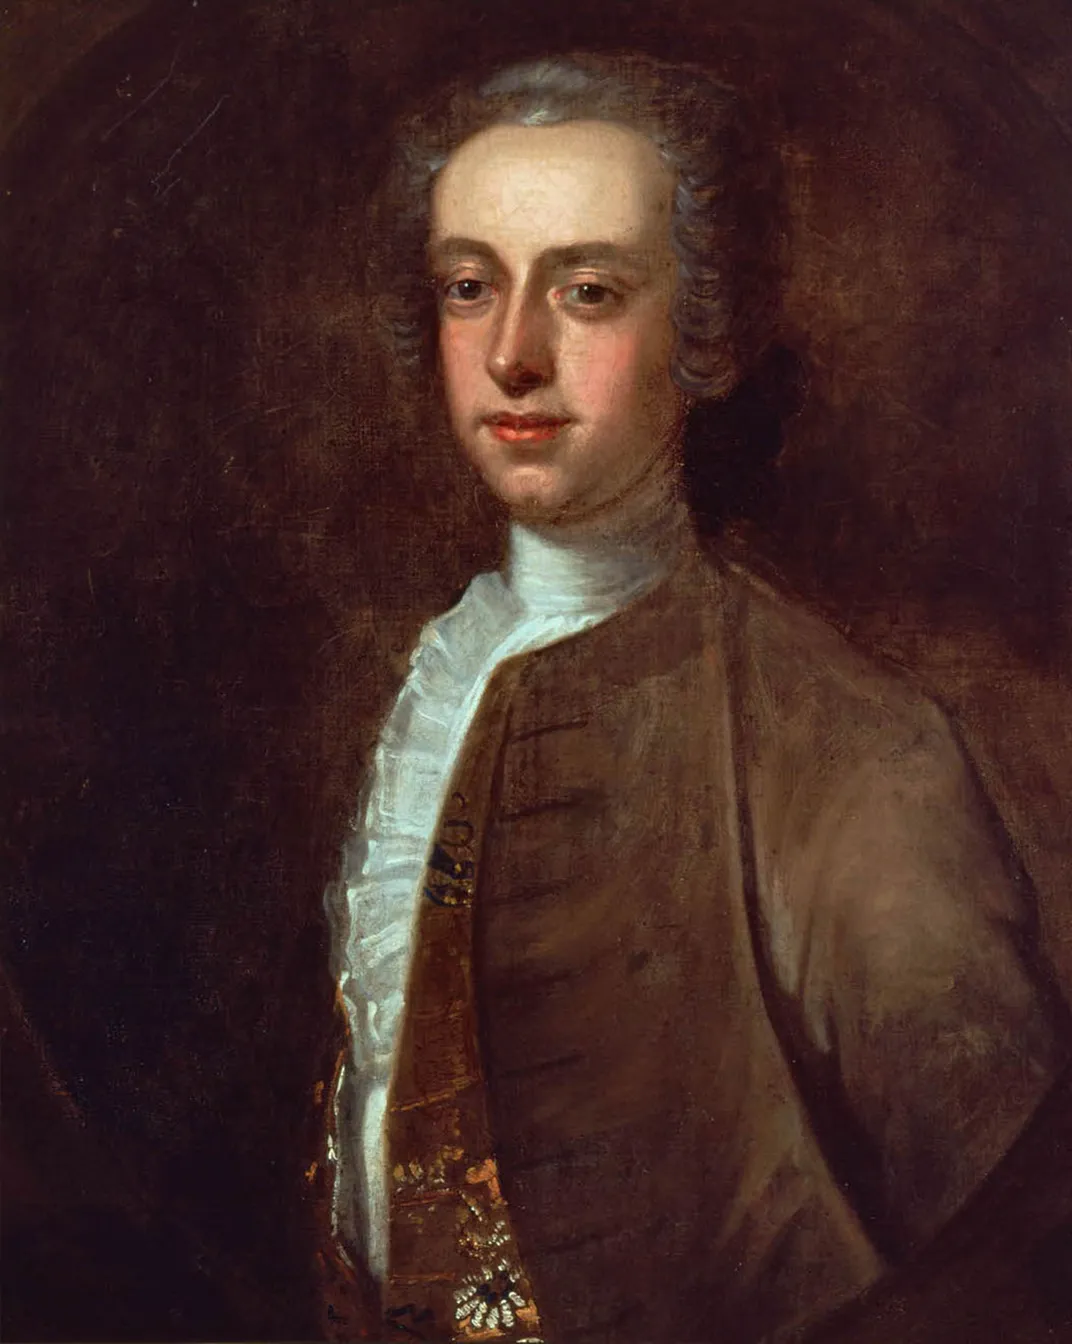 A 1741 portrait of Governor Thomas Hutchinson